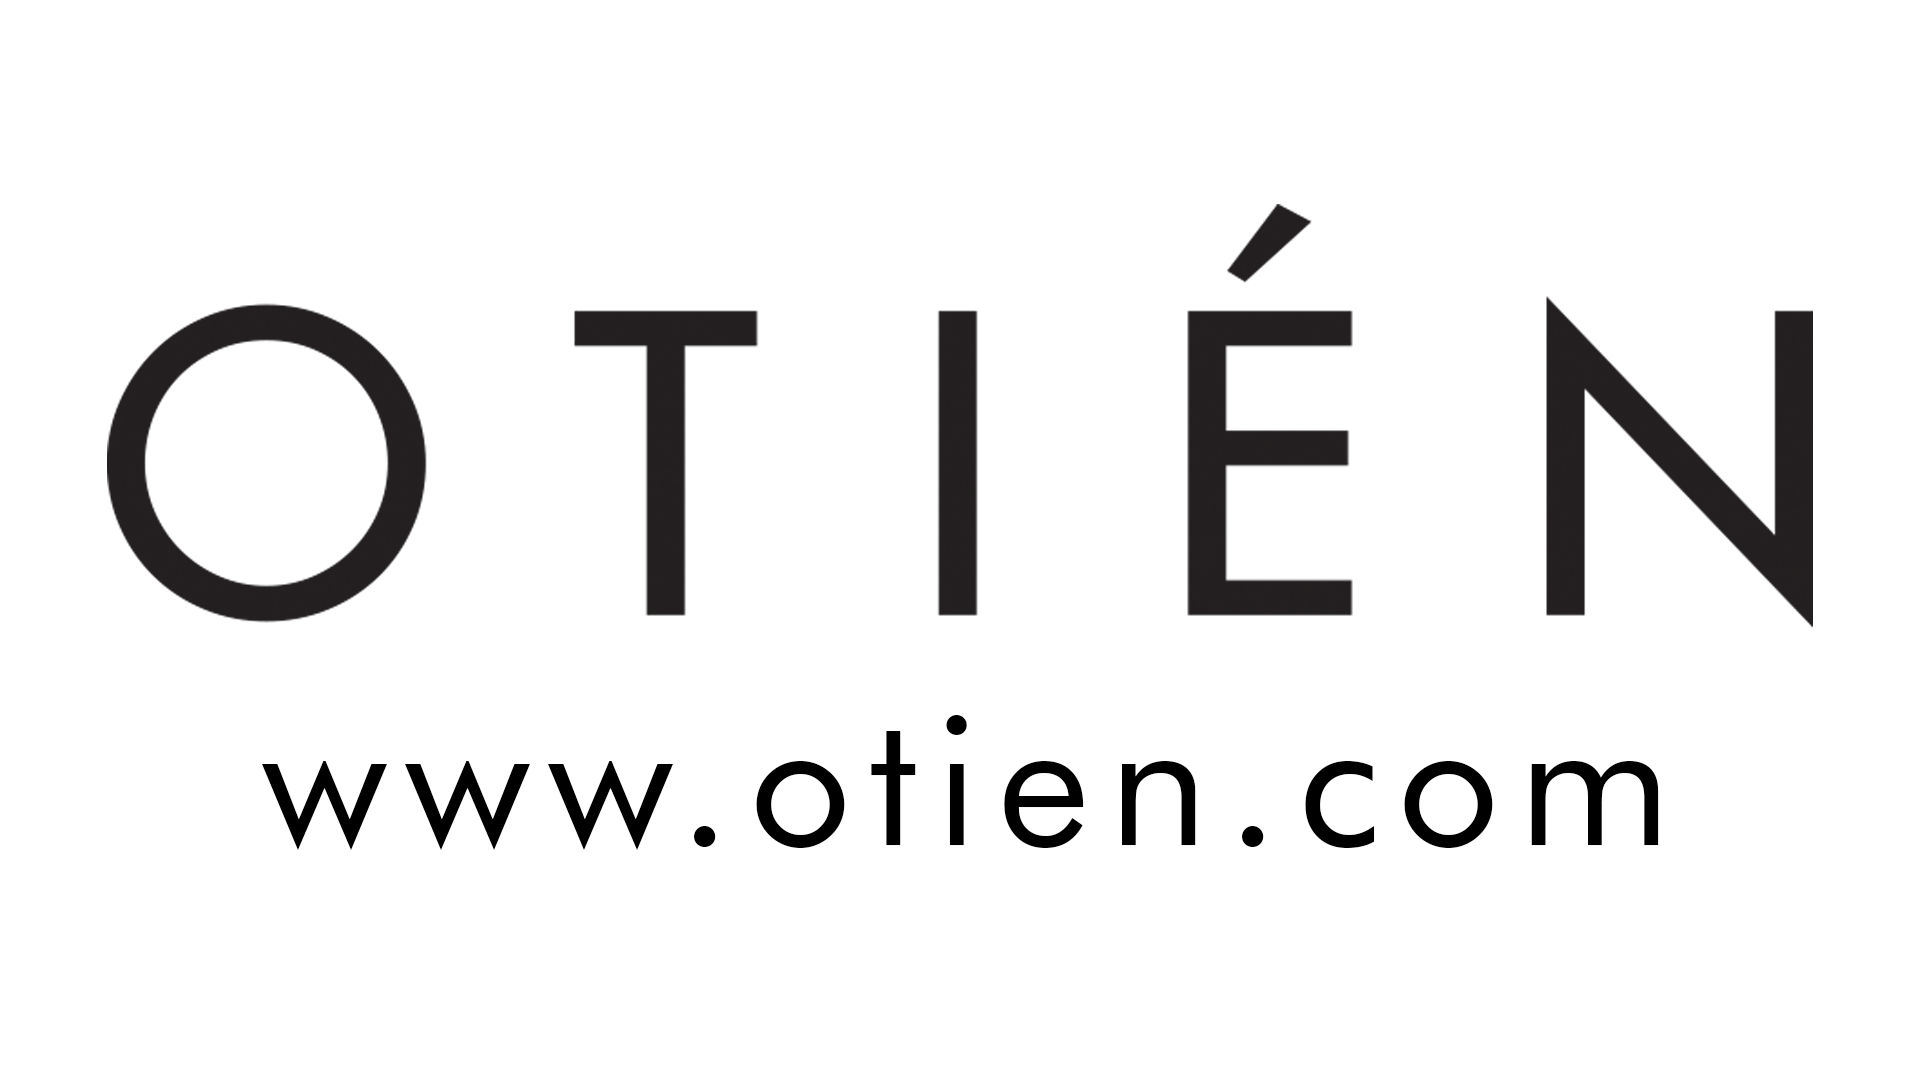 partner: OTIEN - sklep internetowy